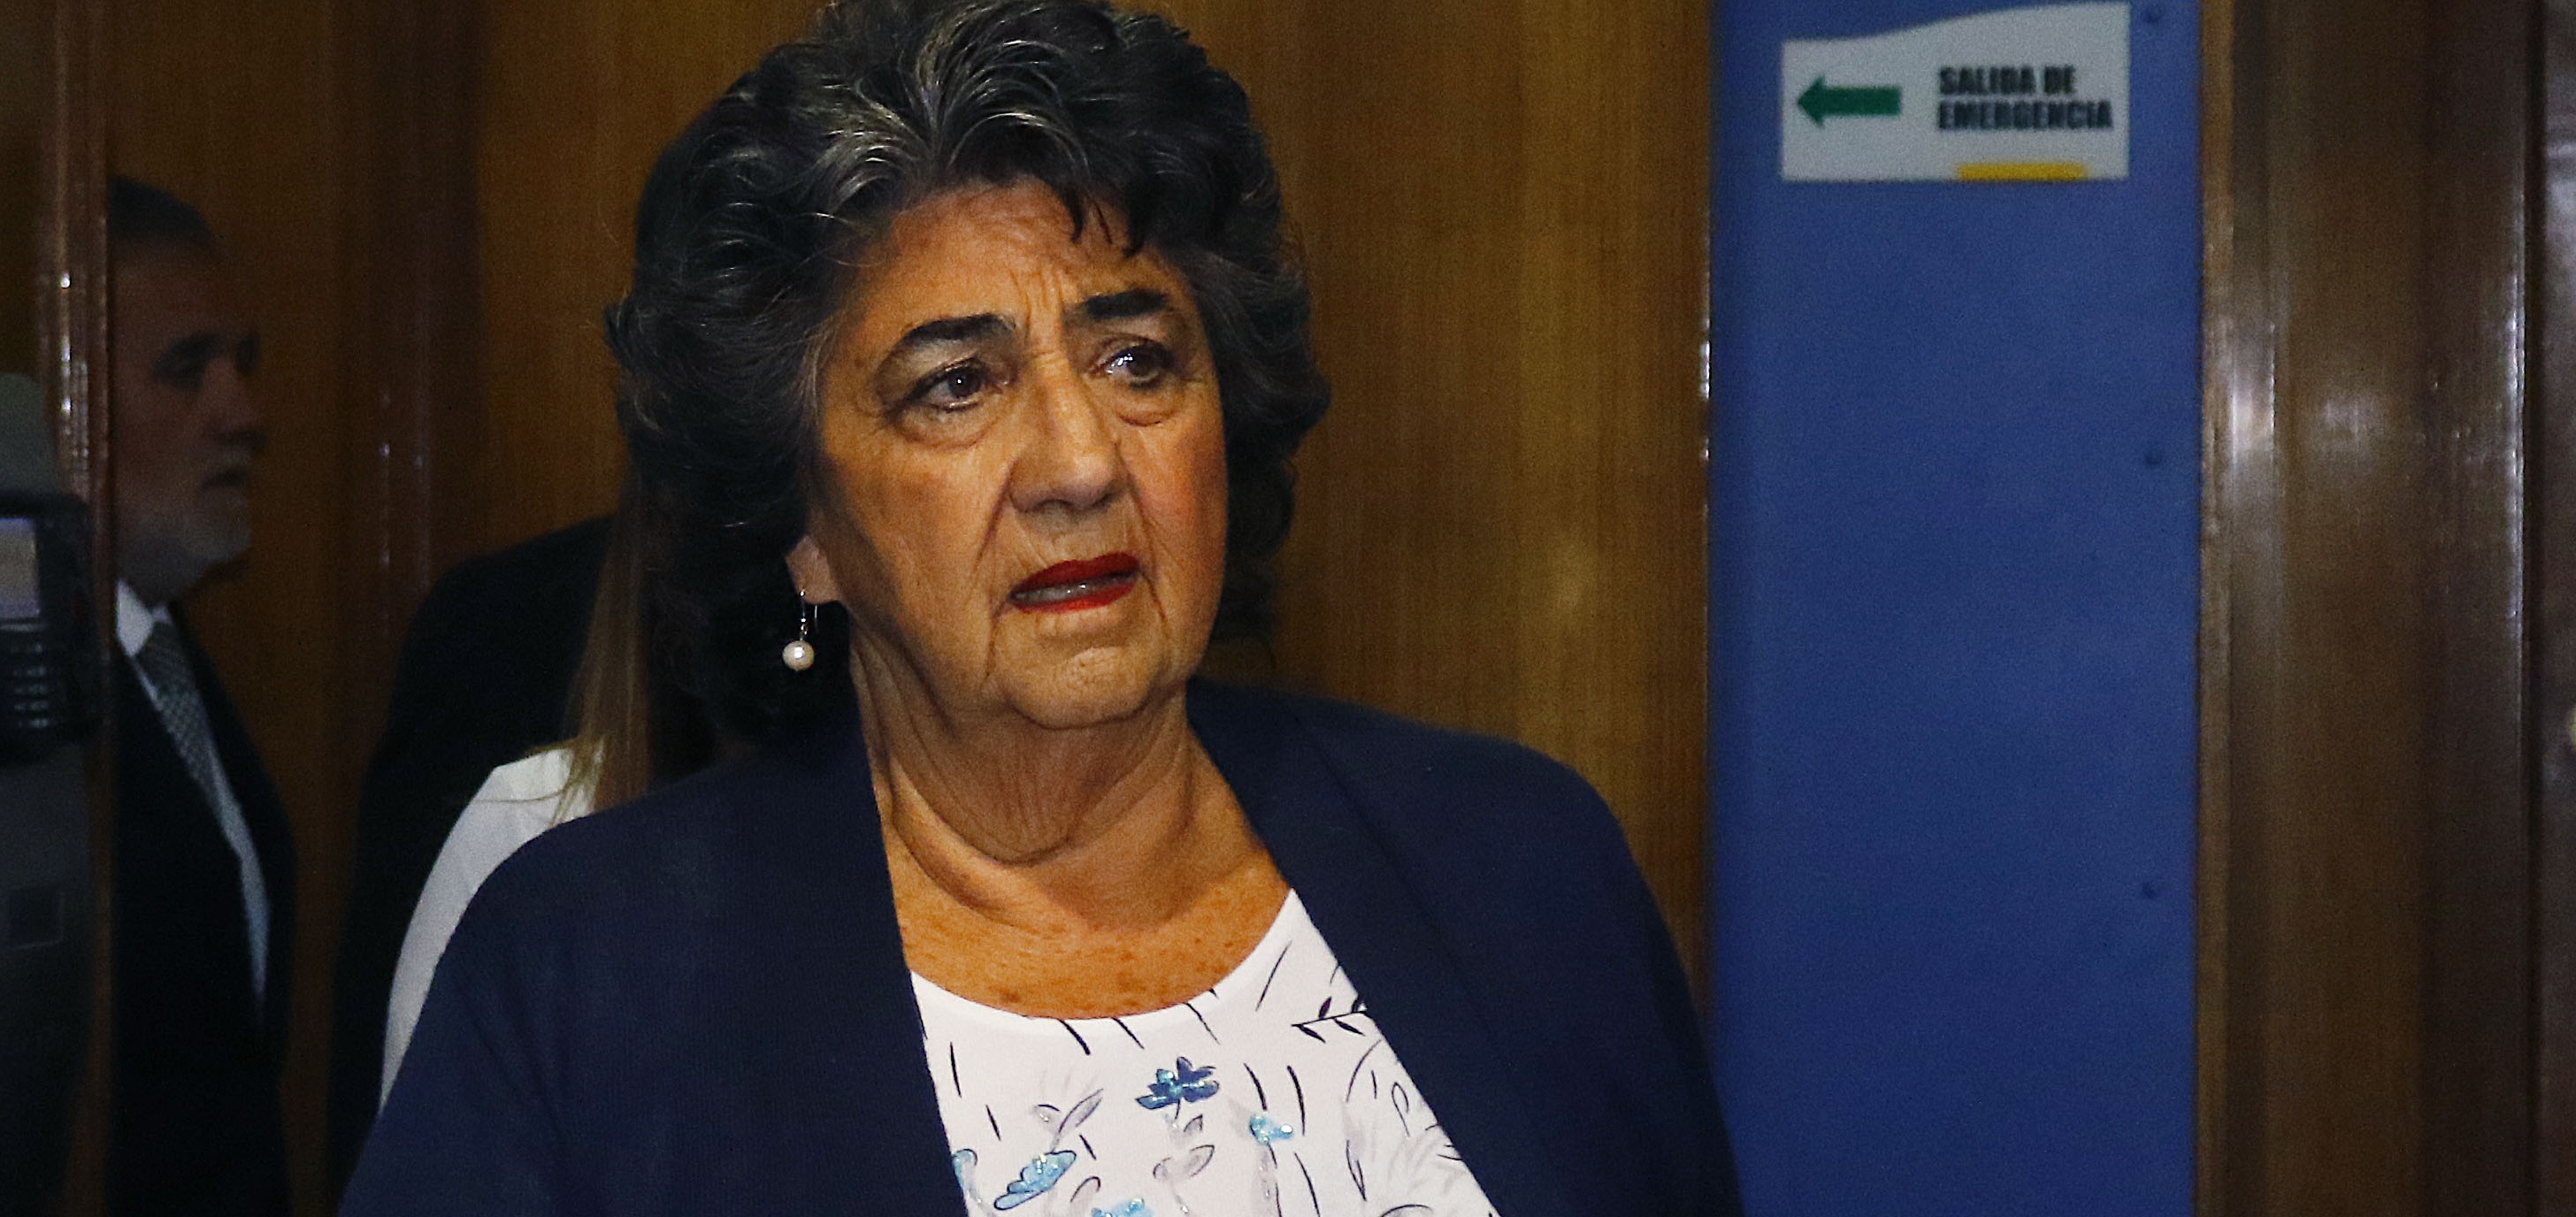 Virginia Reginato queda inhabilitada para ejercer cargos públicos